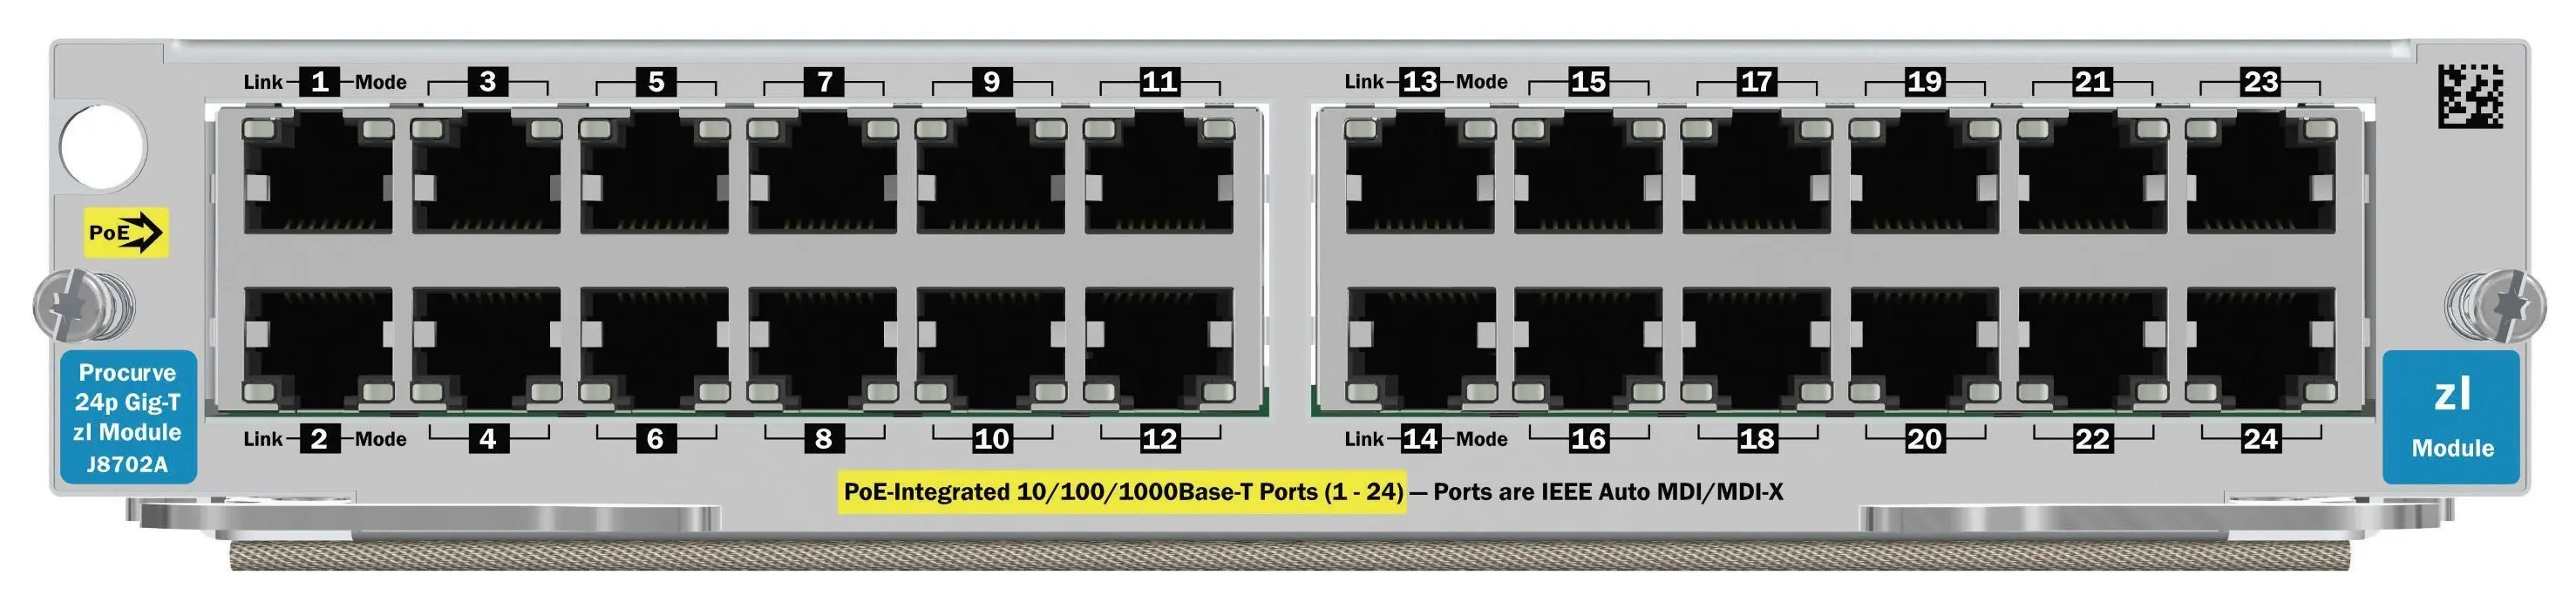 5069-7860 HP ProCurve 5400zl 24-Port 10/100/1000 PoE Integrated Switch Expansion Module